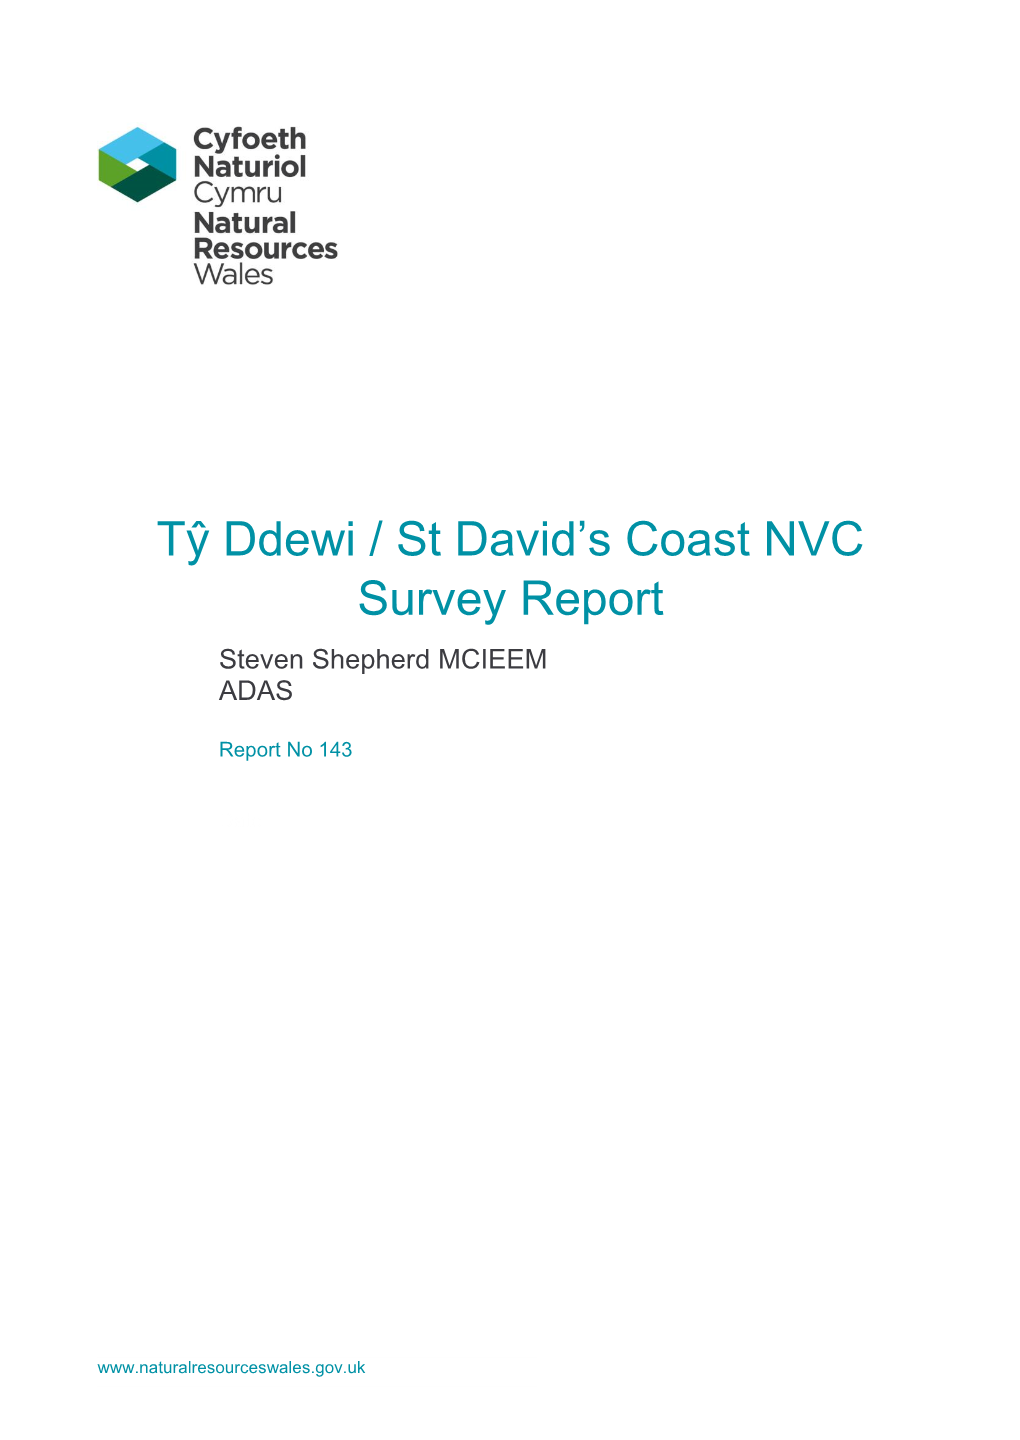 Tŷ Ddewi / St David's Coast NVC Survey Report